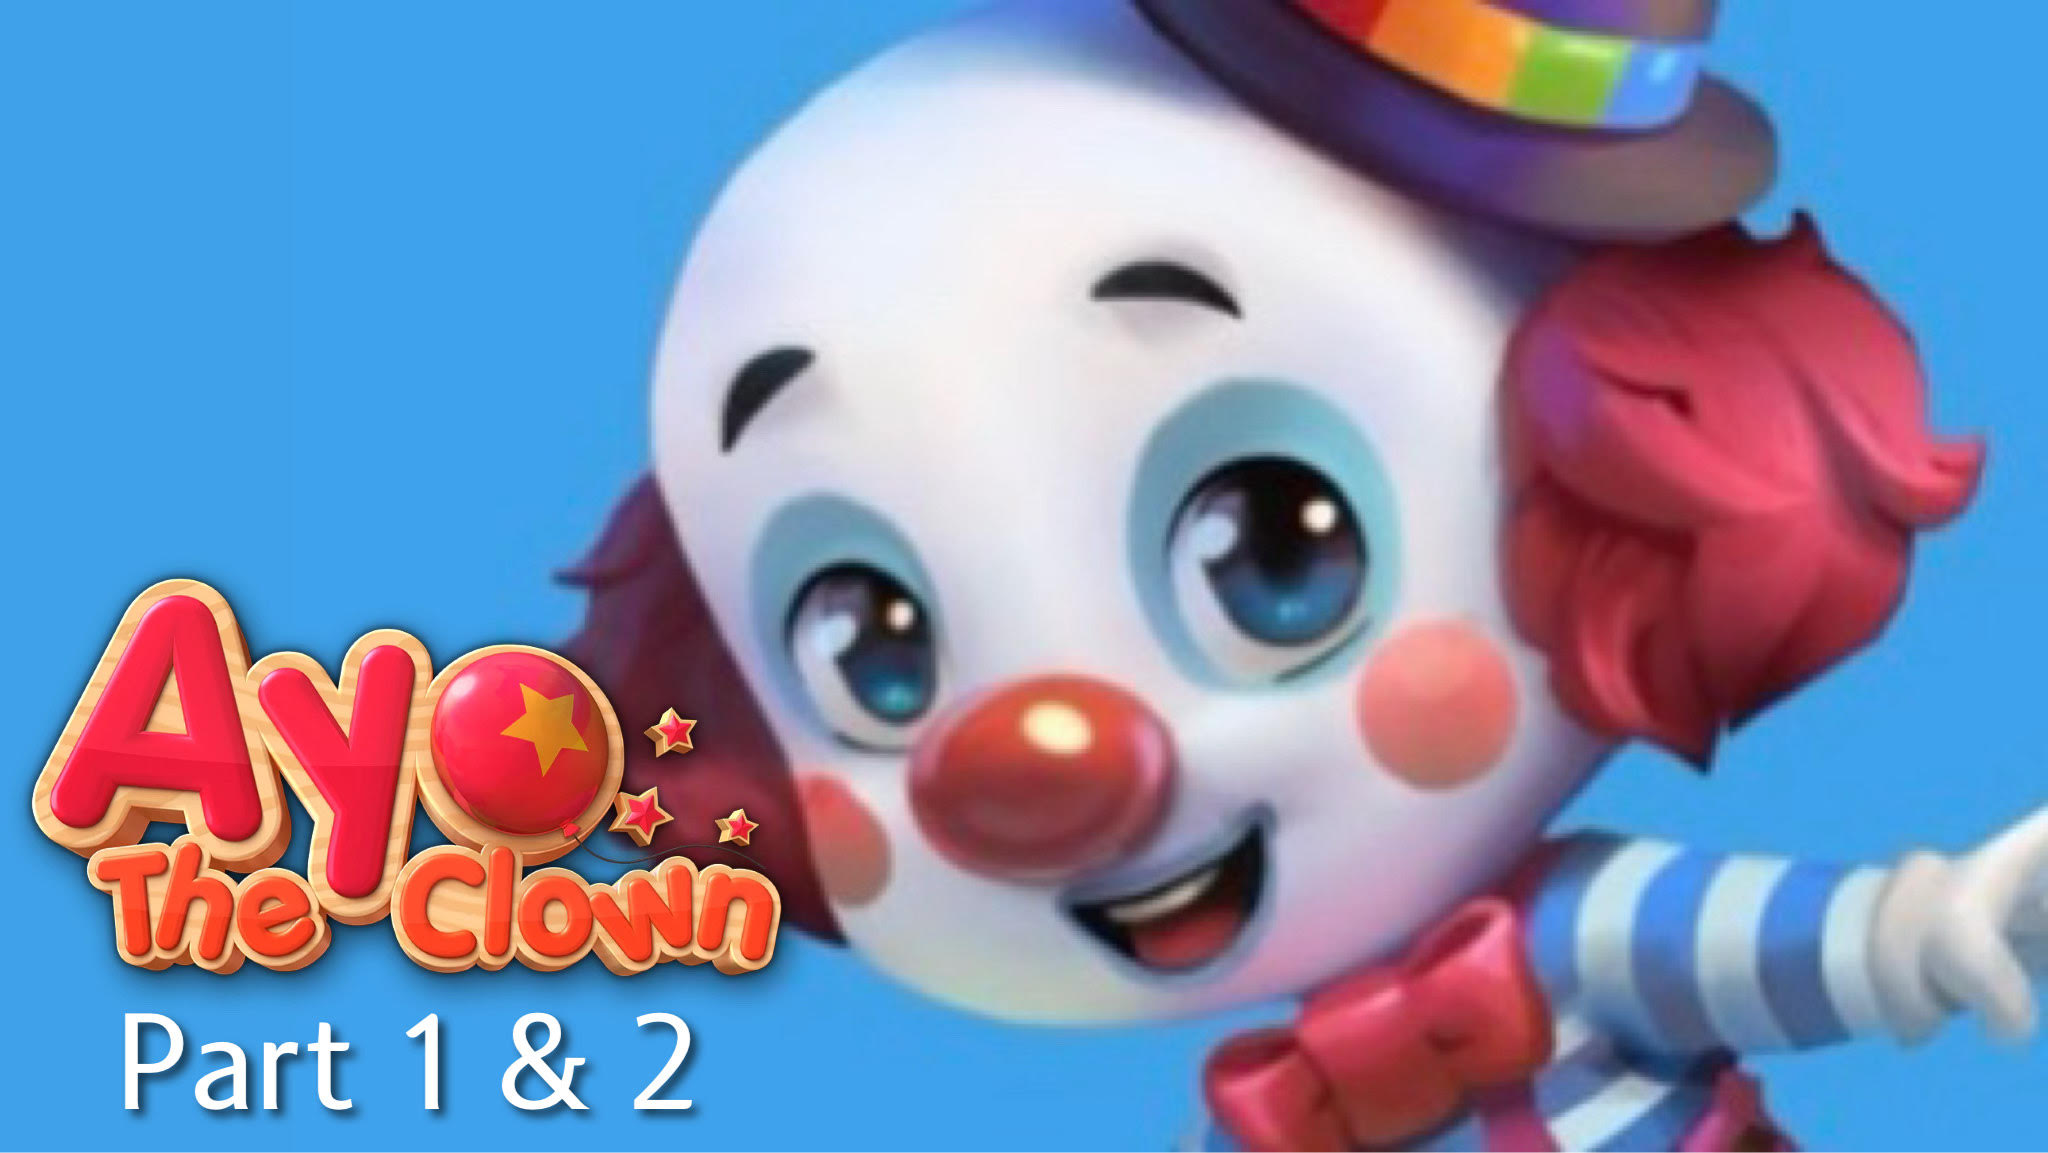 Ayo the Clown - Part 1 & 2 (Xbox)